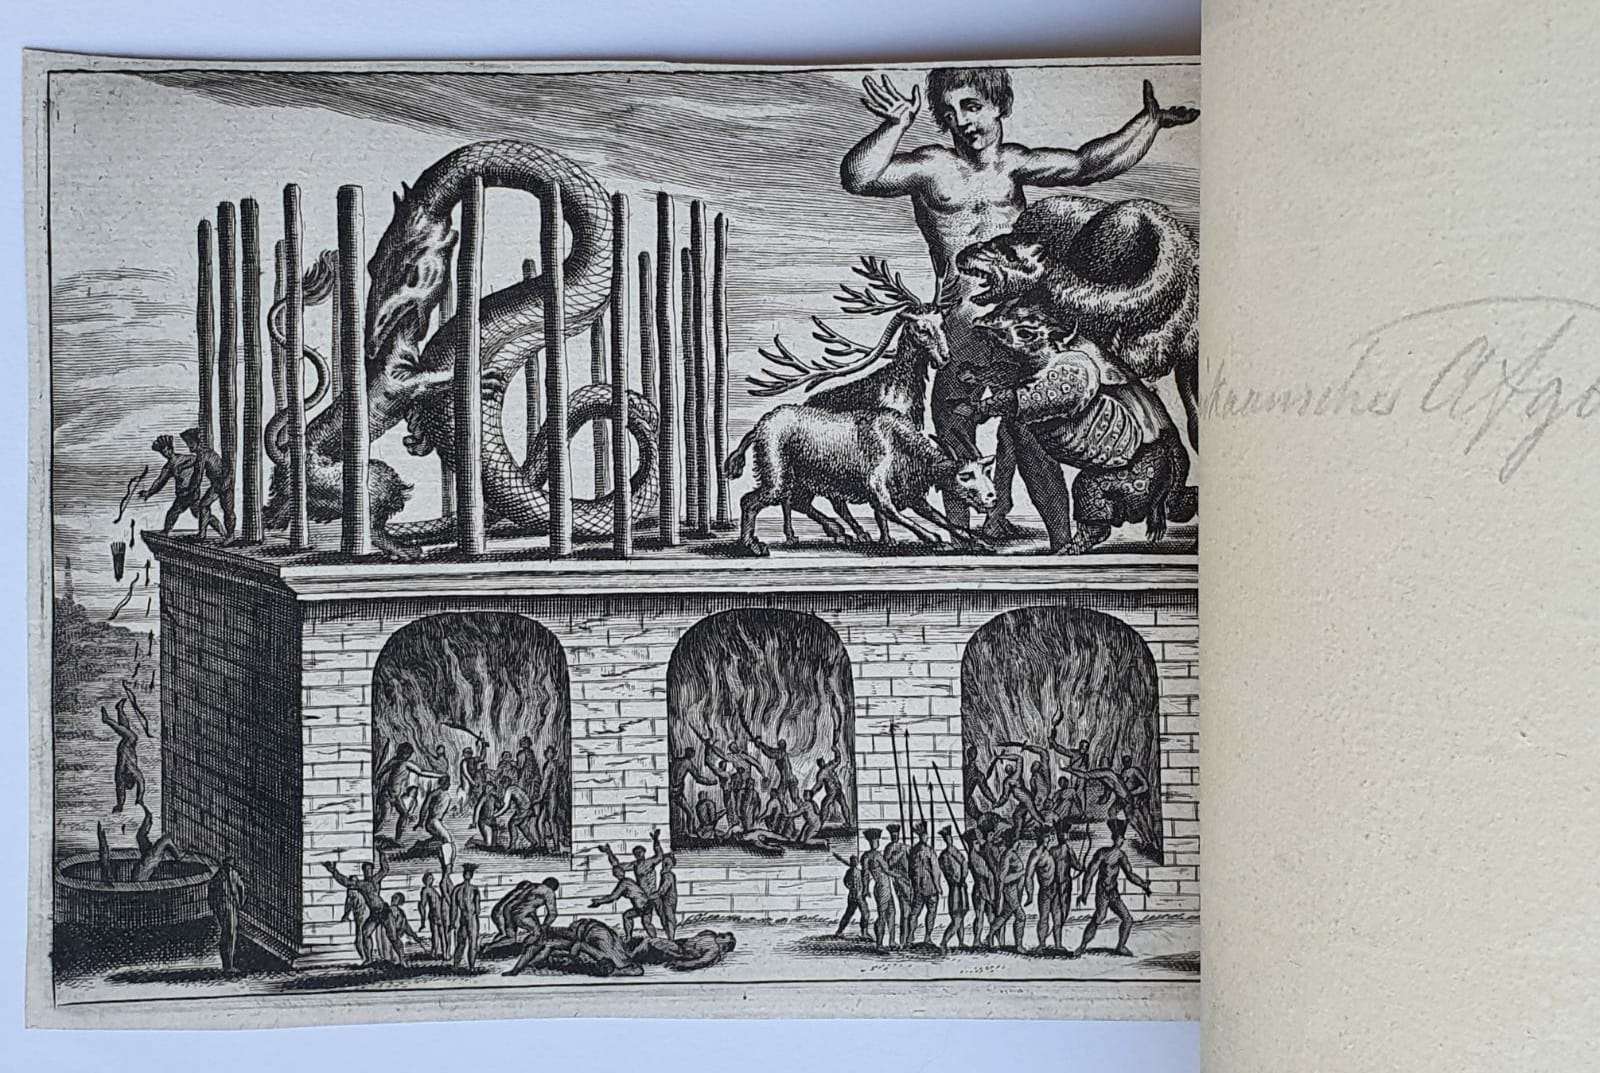 [Original engraving, gravure] J. van Meurs [?] The Island of Sacrifice, published 1670-1671.